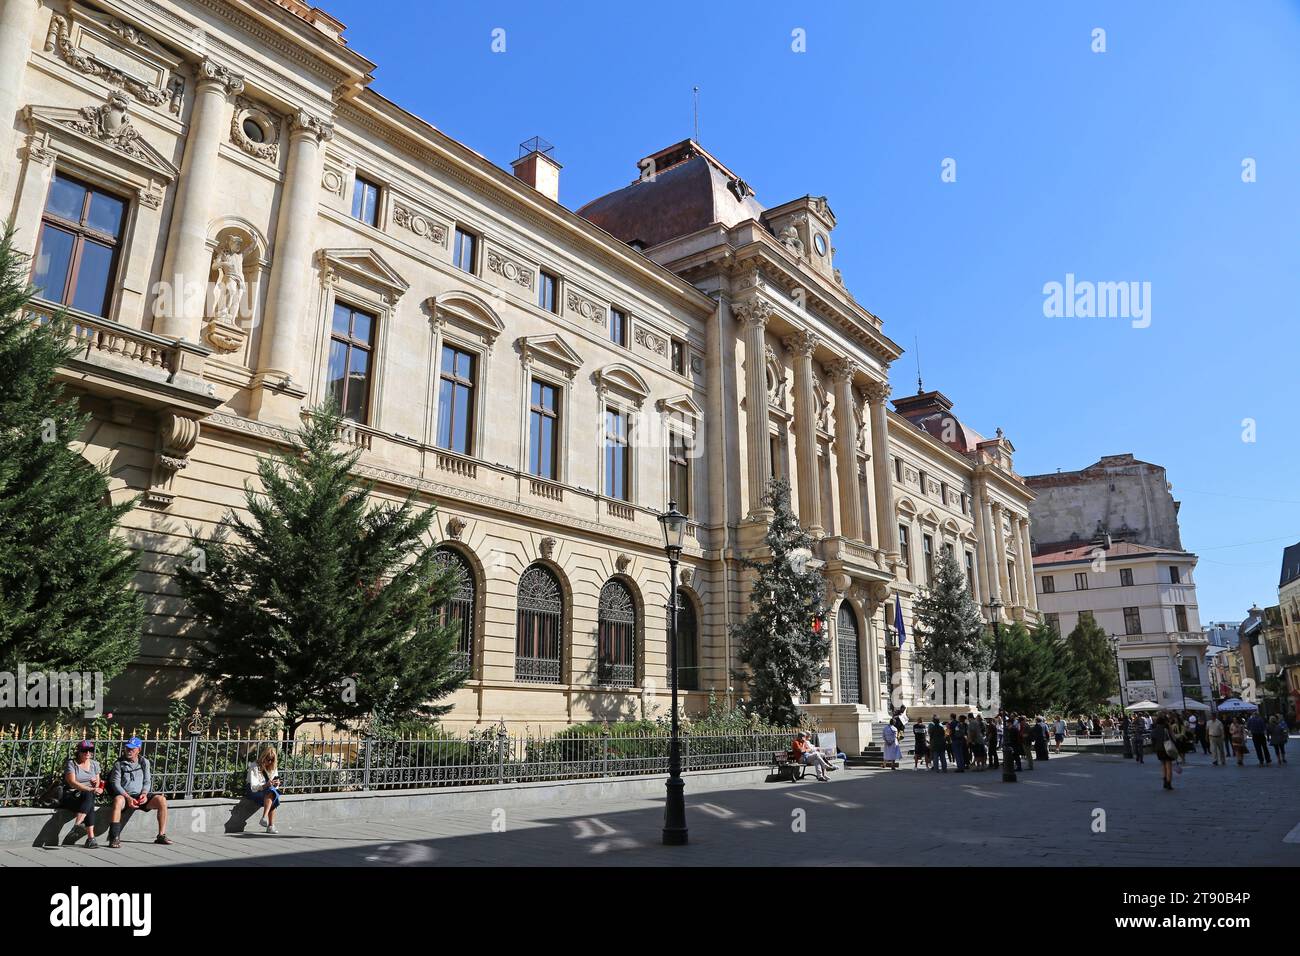 National Bank of Romania (Banca Națională a României, BNR), old facade on Strada Lipscani, Old Town, Historic Centre, Bucharest, Romania, Europe Stock Photo